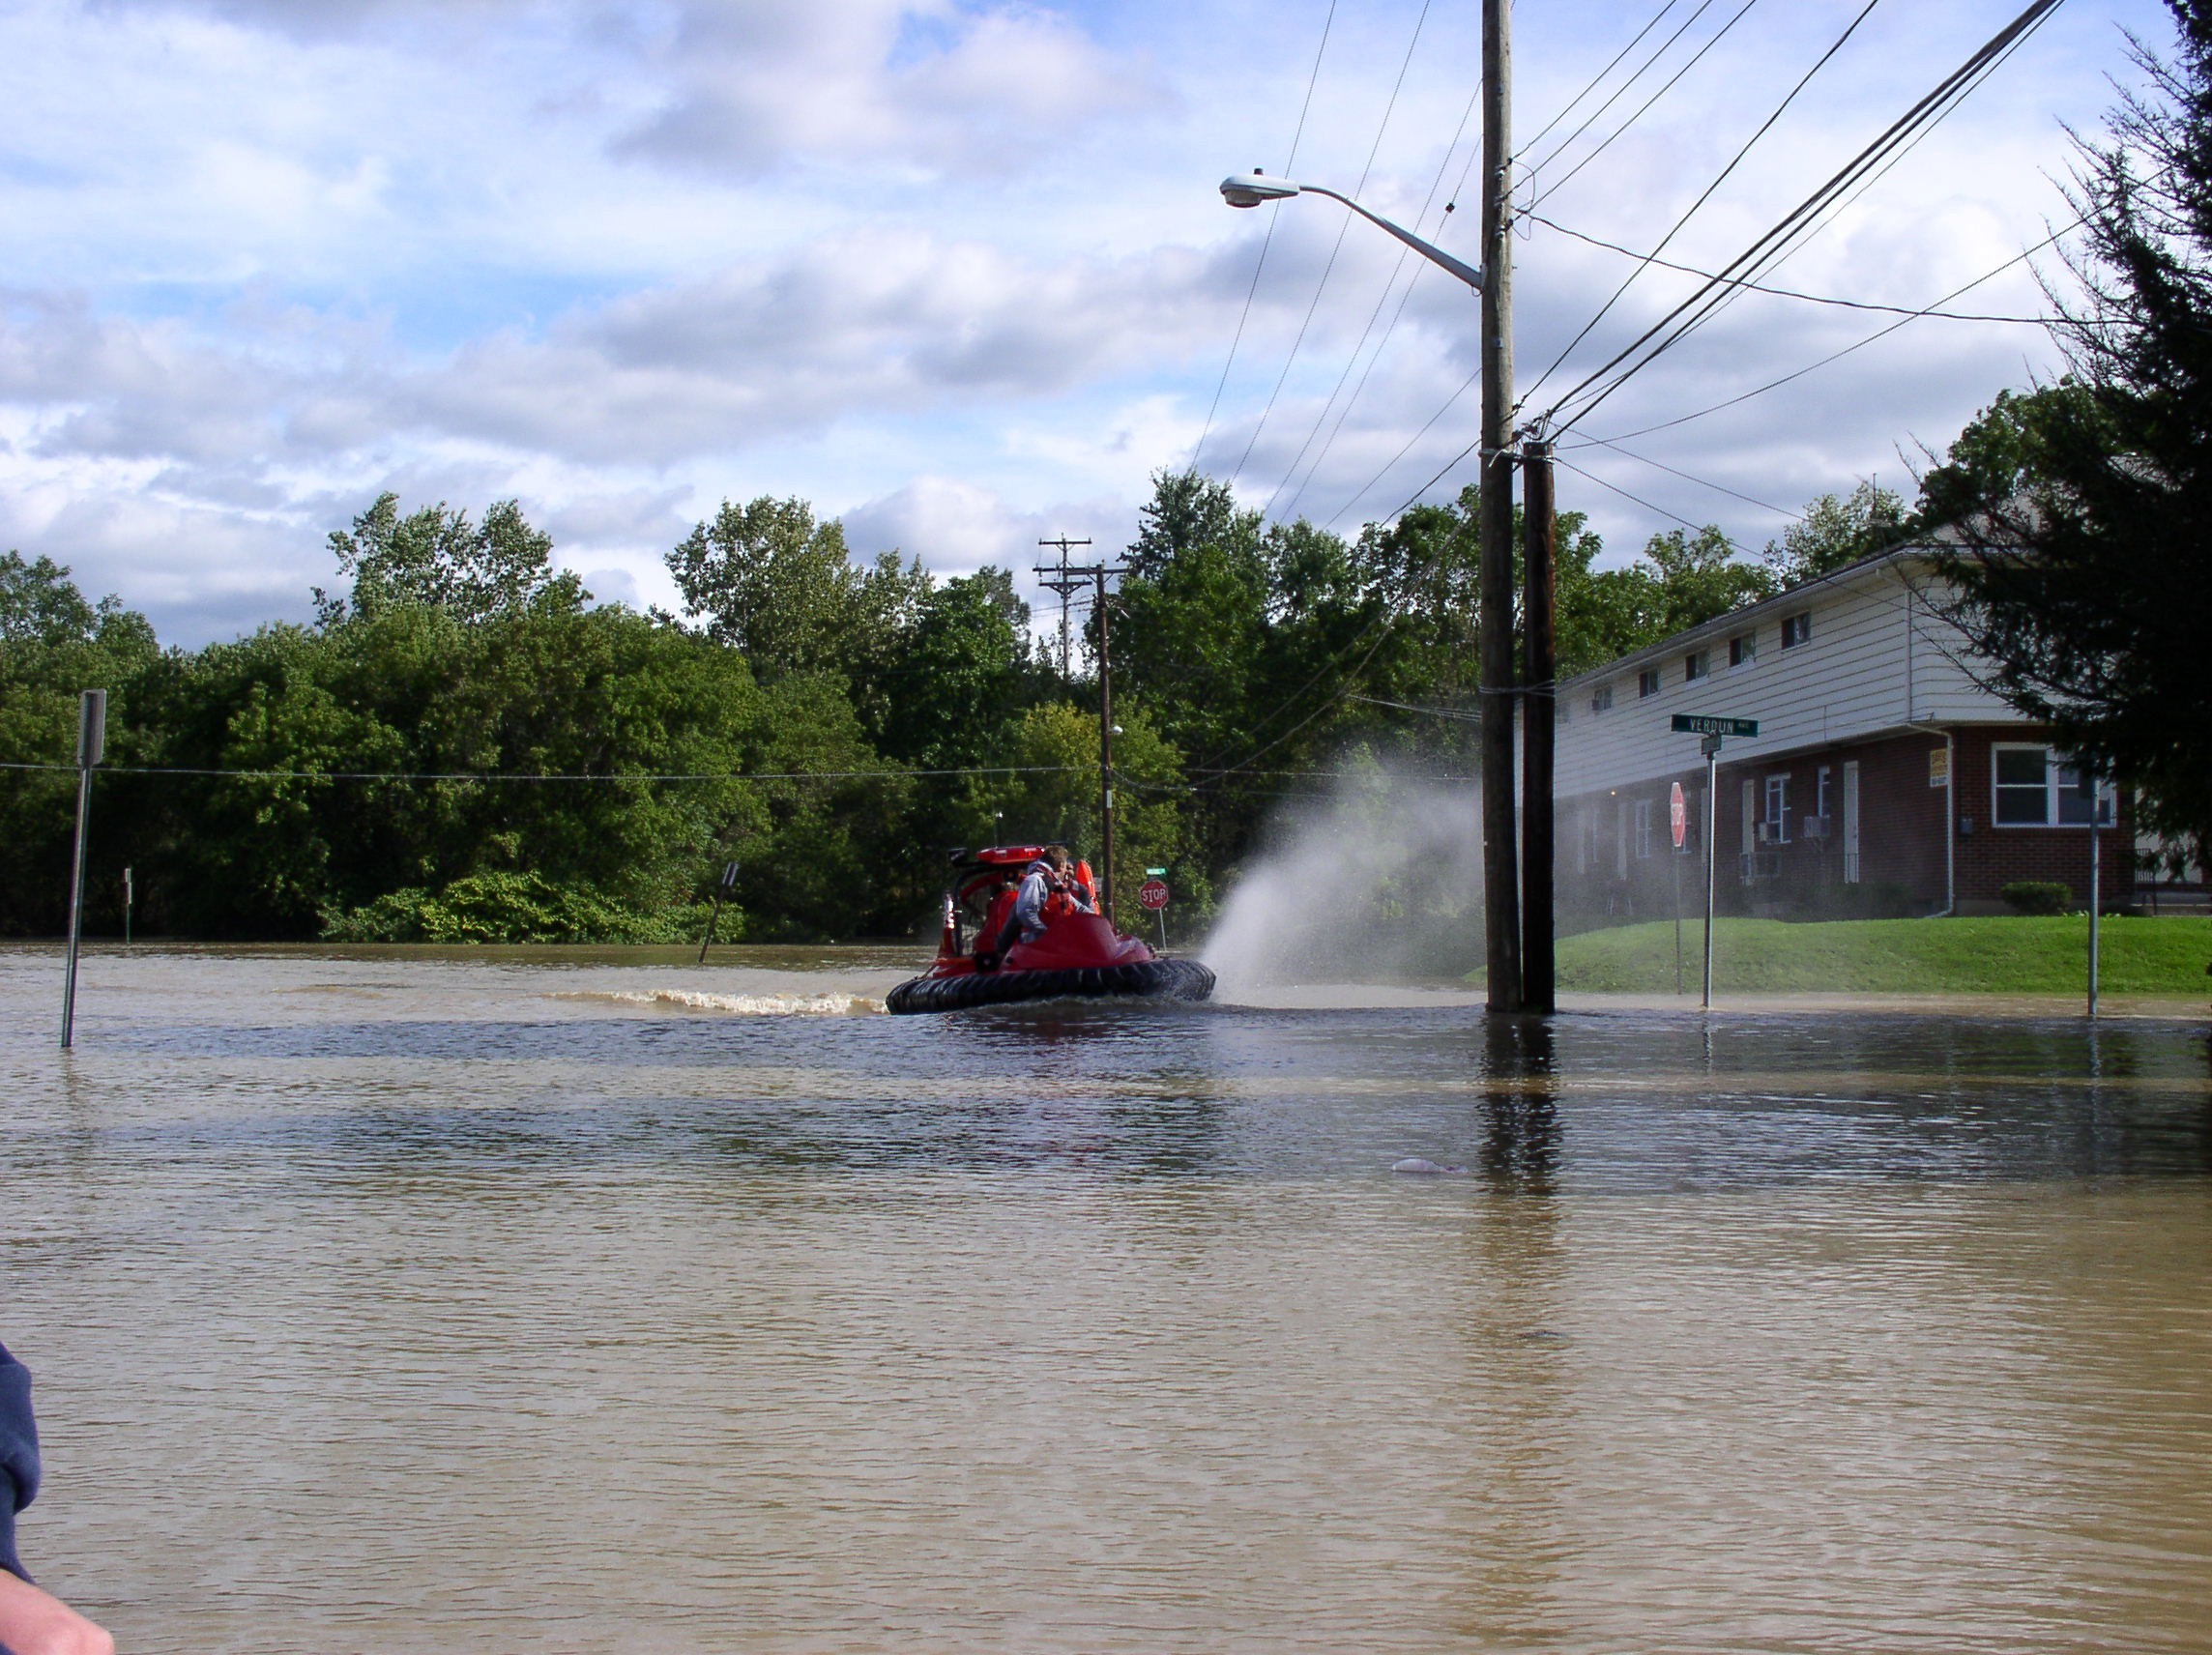 09-18-04  Response - Flooding